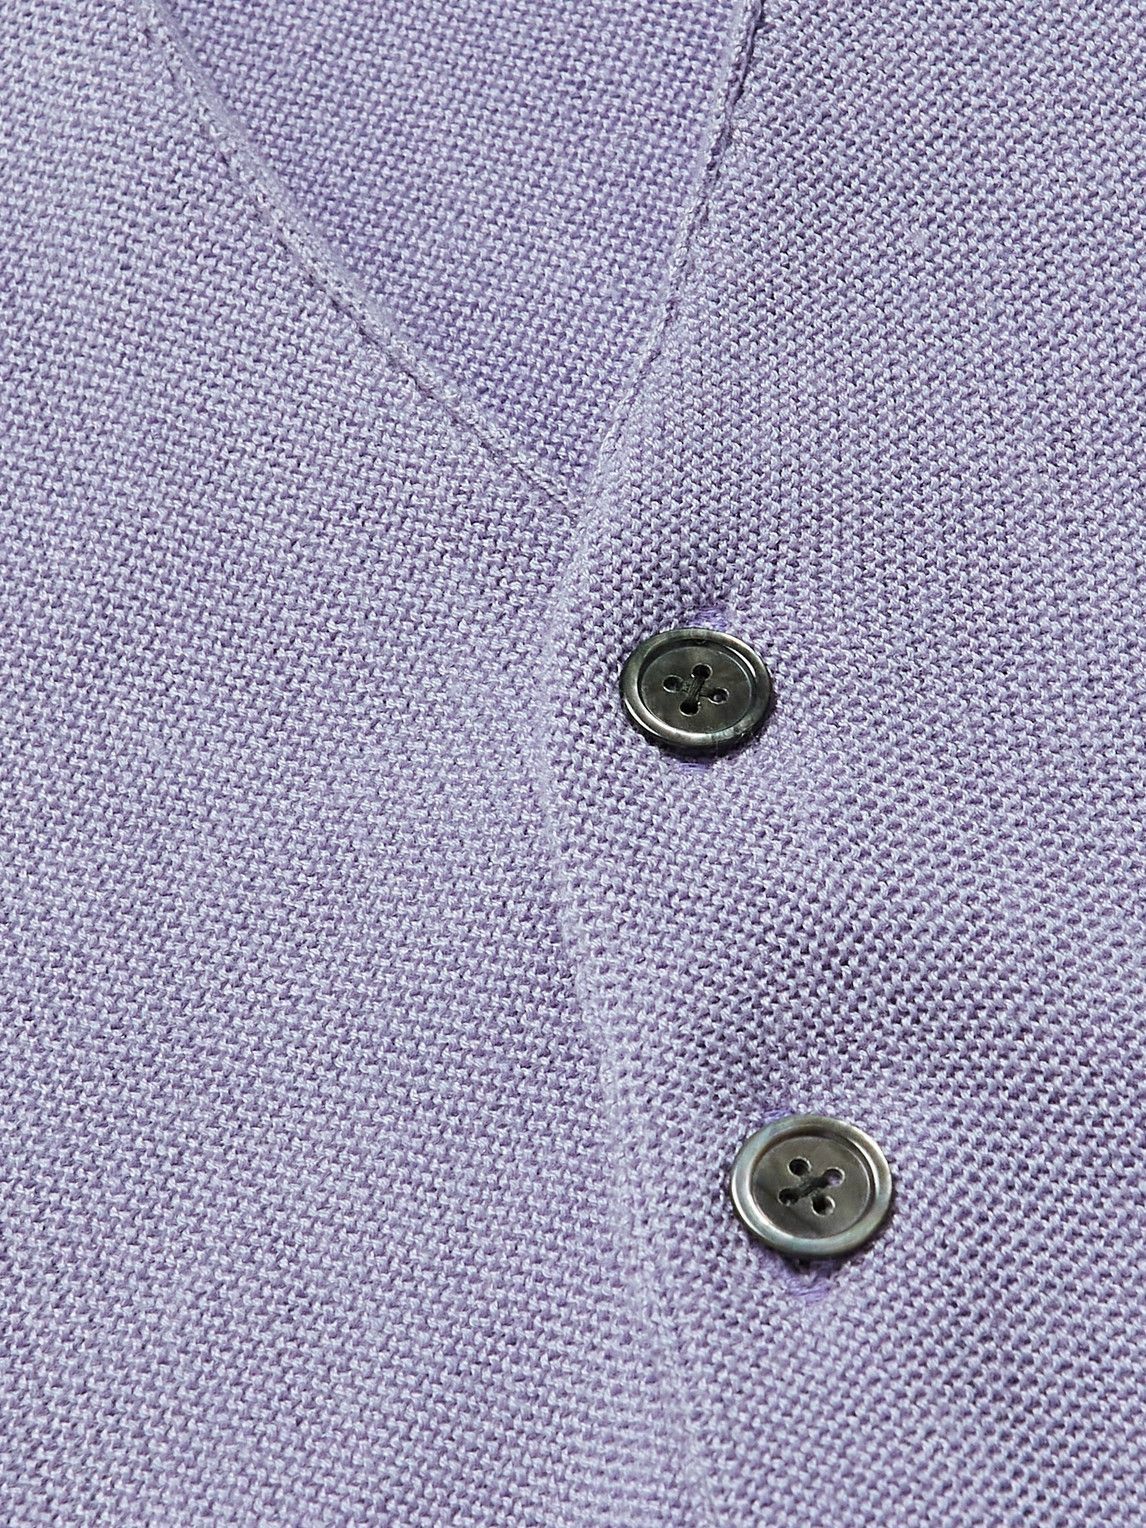 KAPITAL - Intarsia Knitted Cardigan - Purple KAPITAL